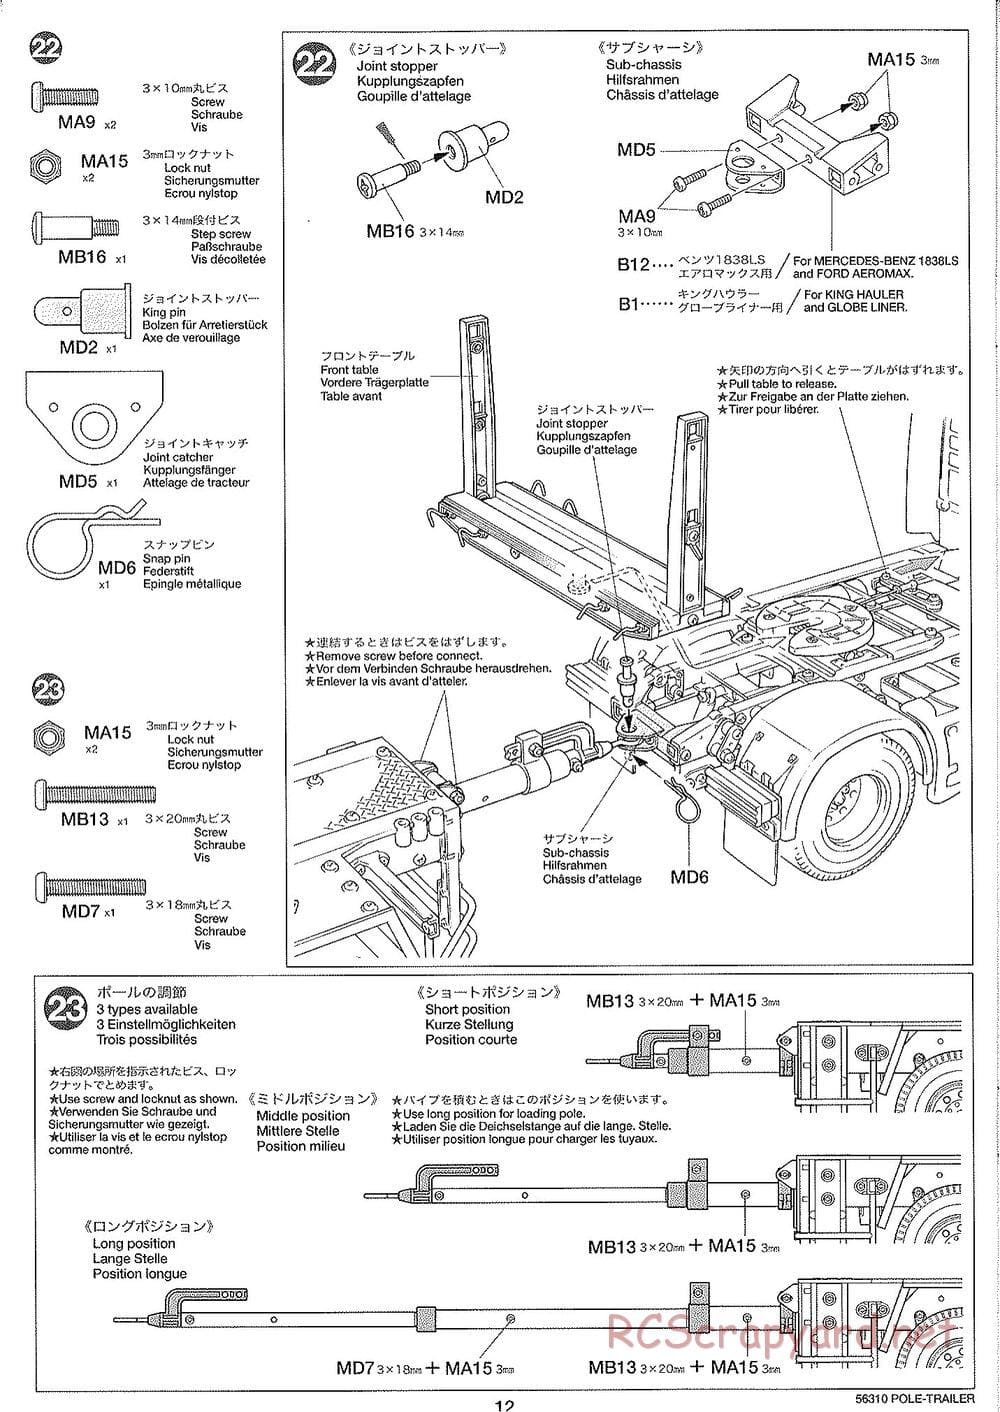 Tamiya - Semi Pole Trailer Chassis - Manual - Page 12